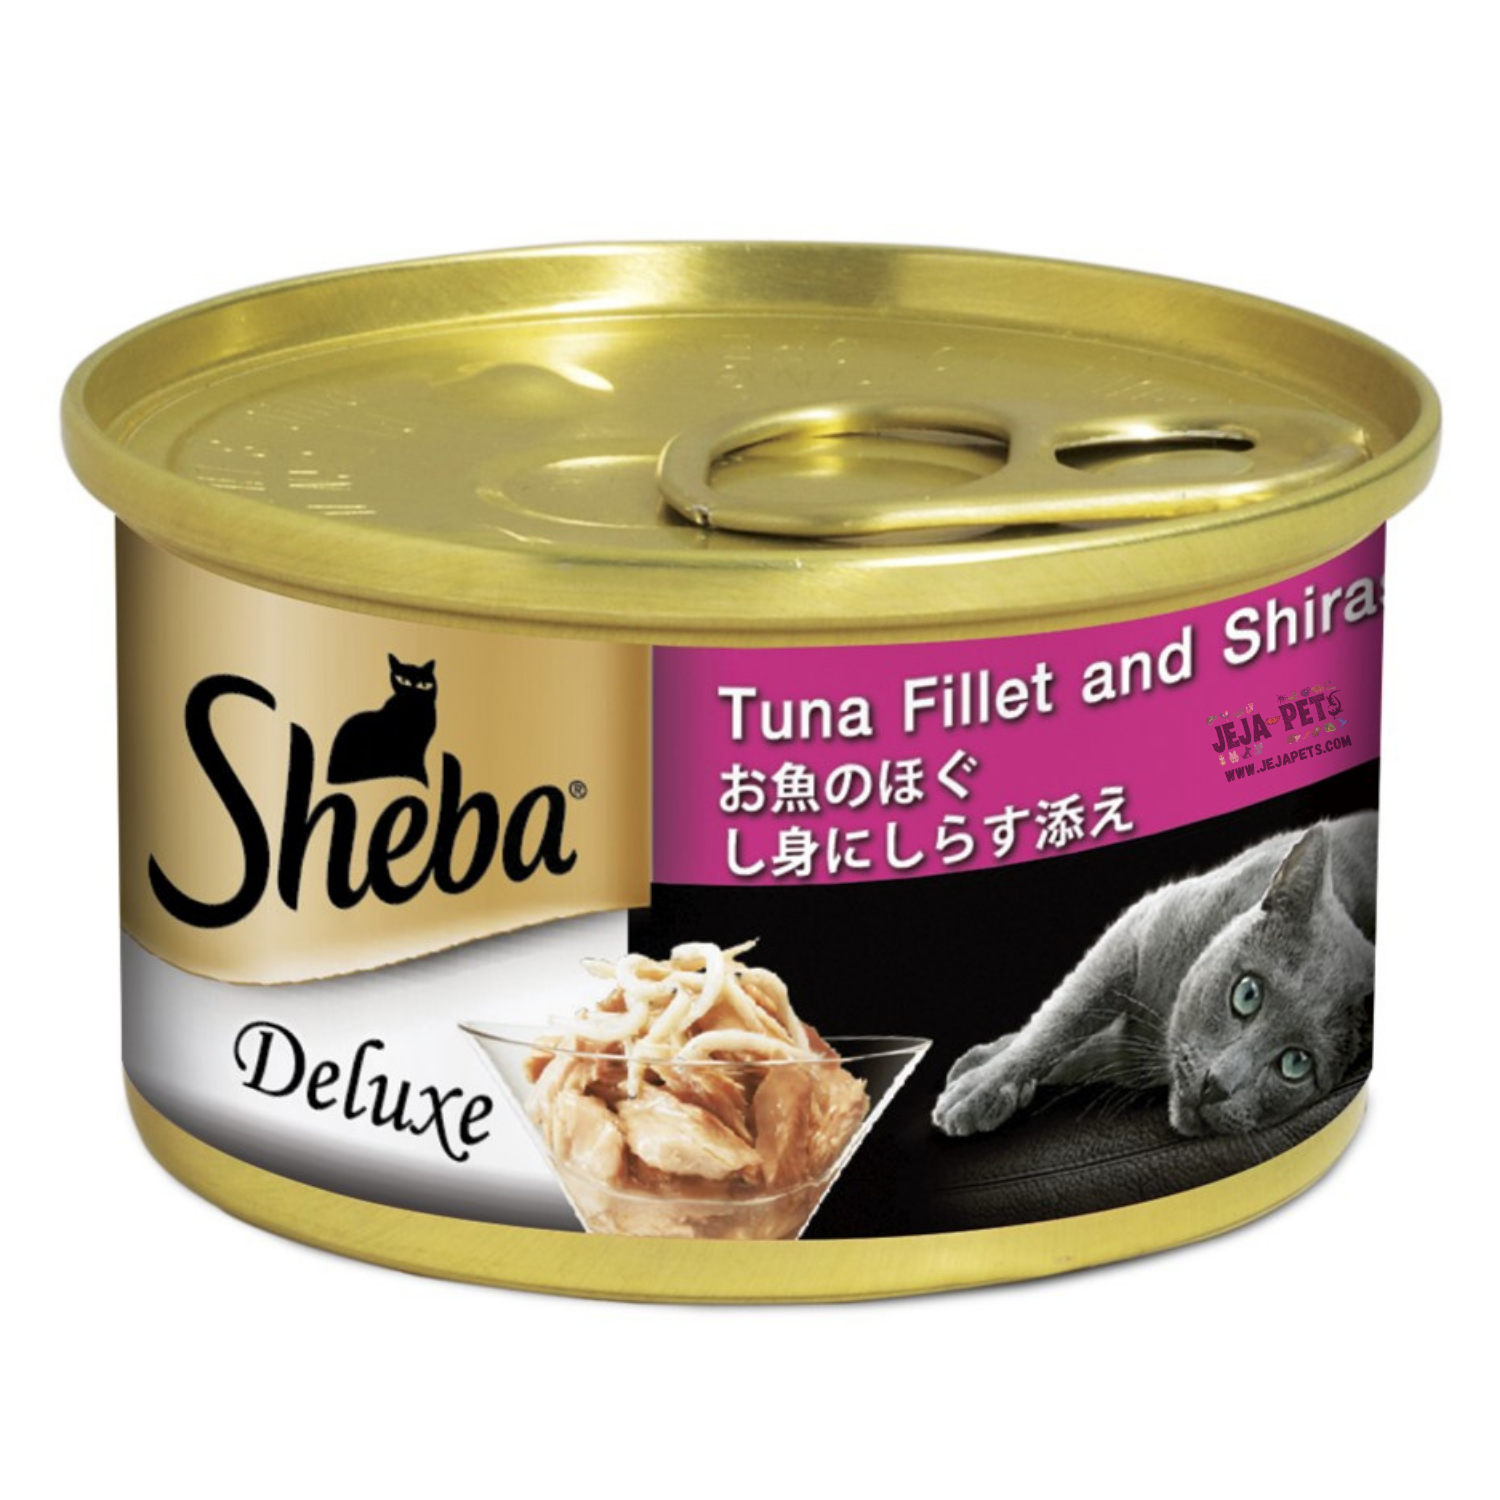 [DISCONTINUED] Sheba Tuna Fillet & Shirasu Wet Cat Food - 85g